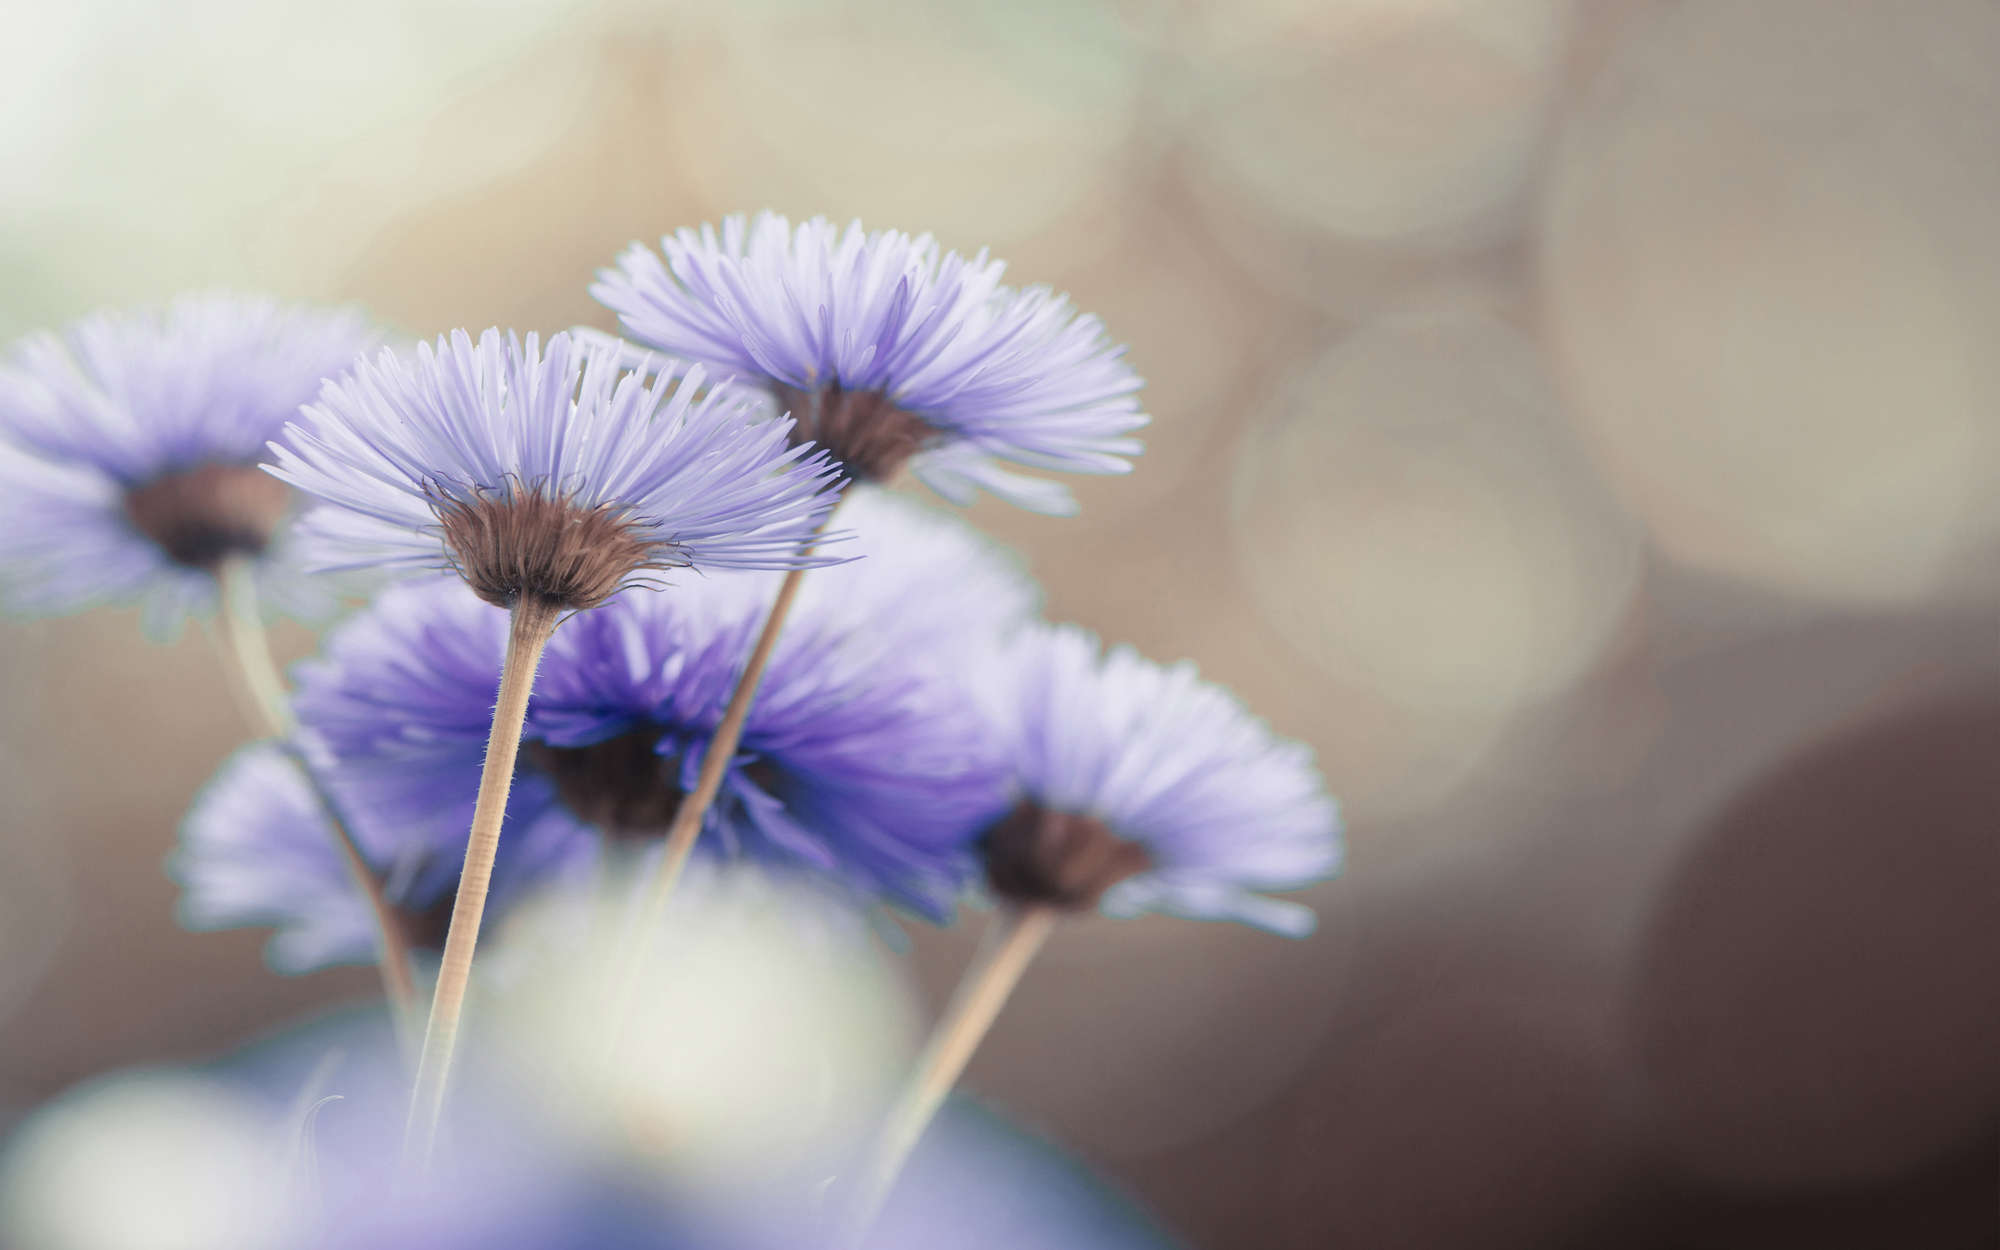             Fototapete Blumen in Violett – Premium Glattvlies
        